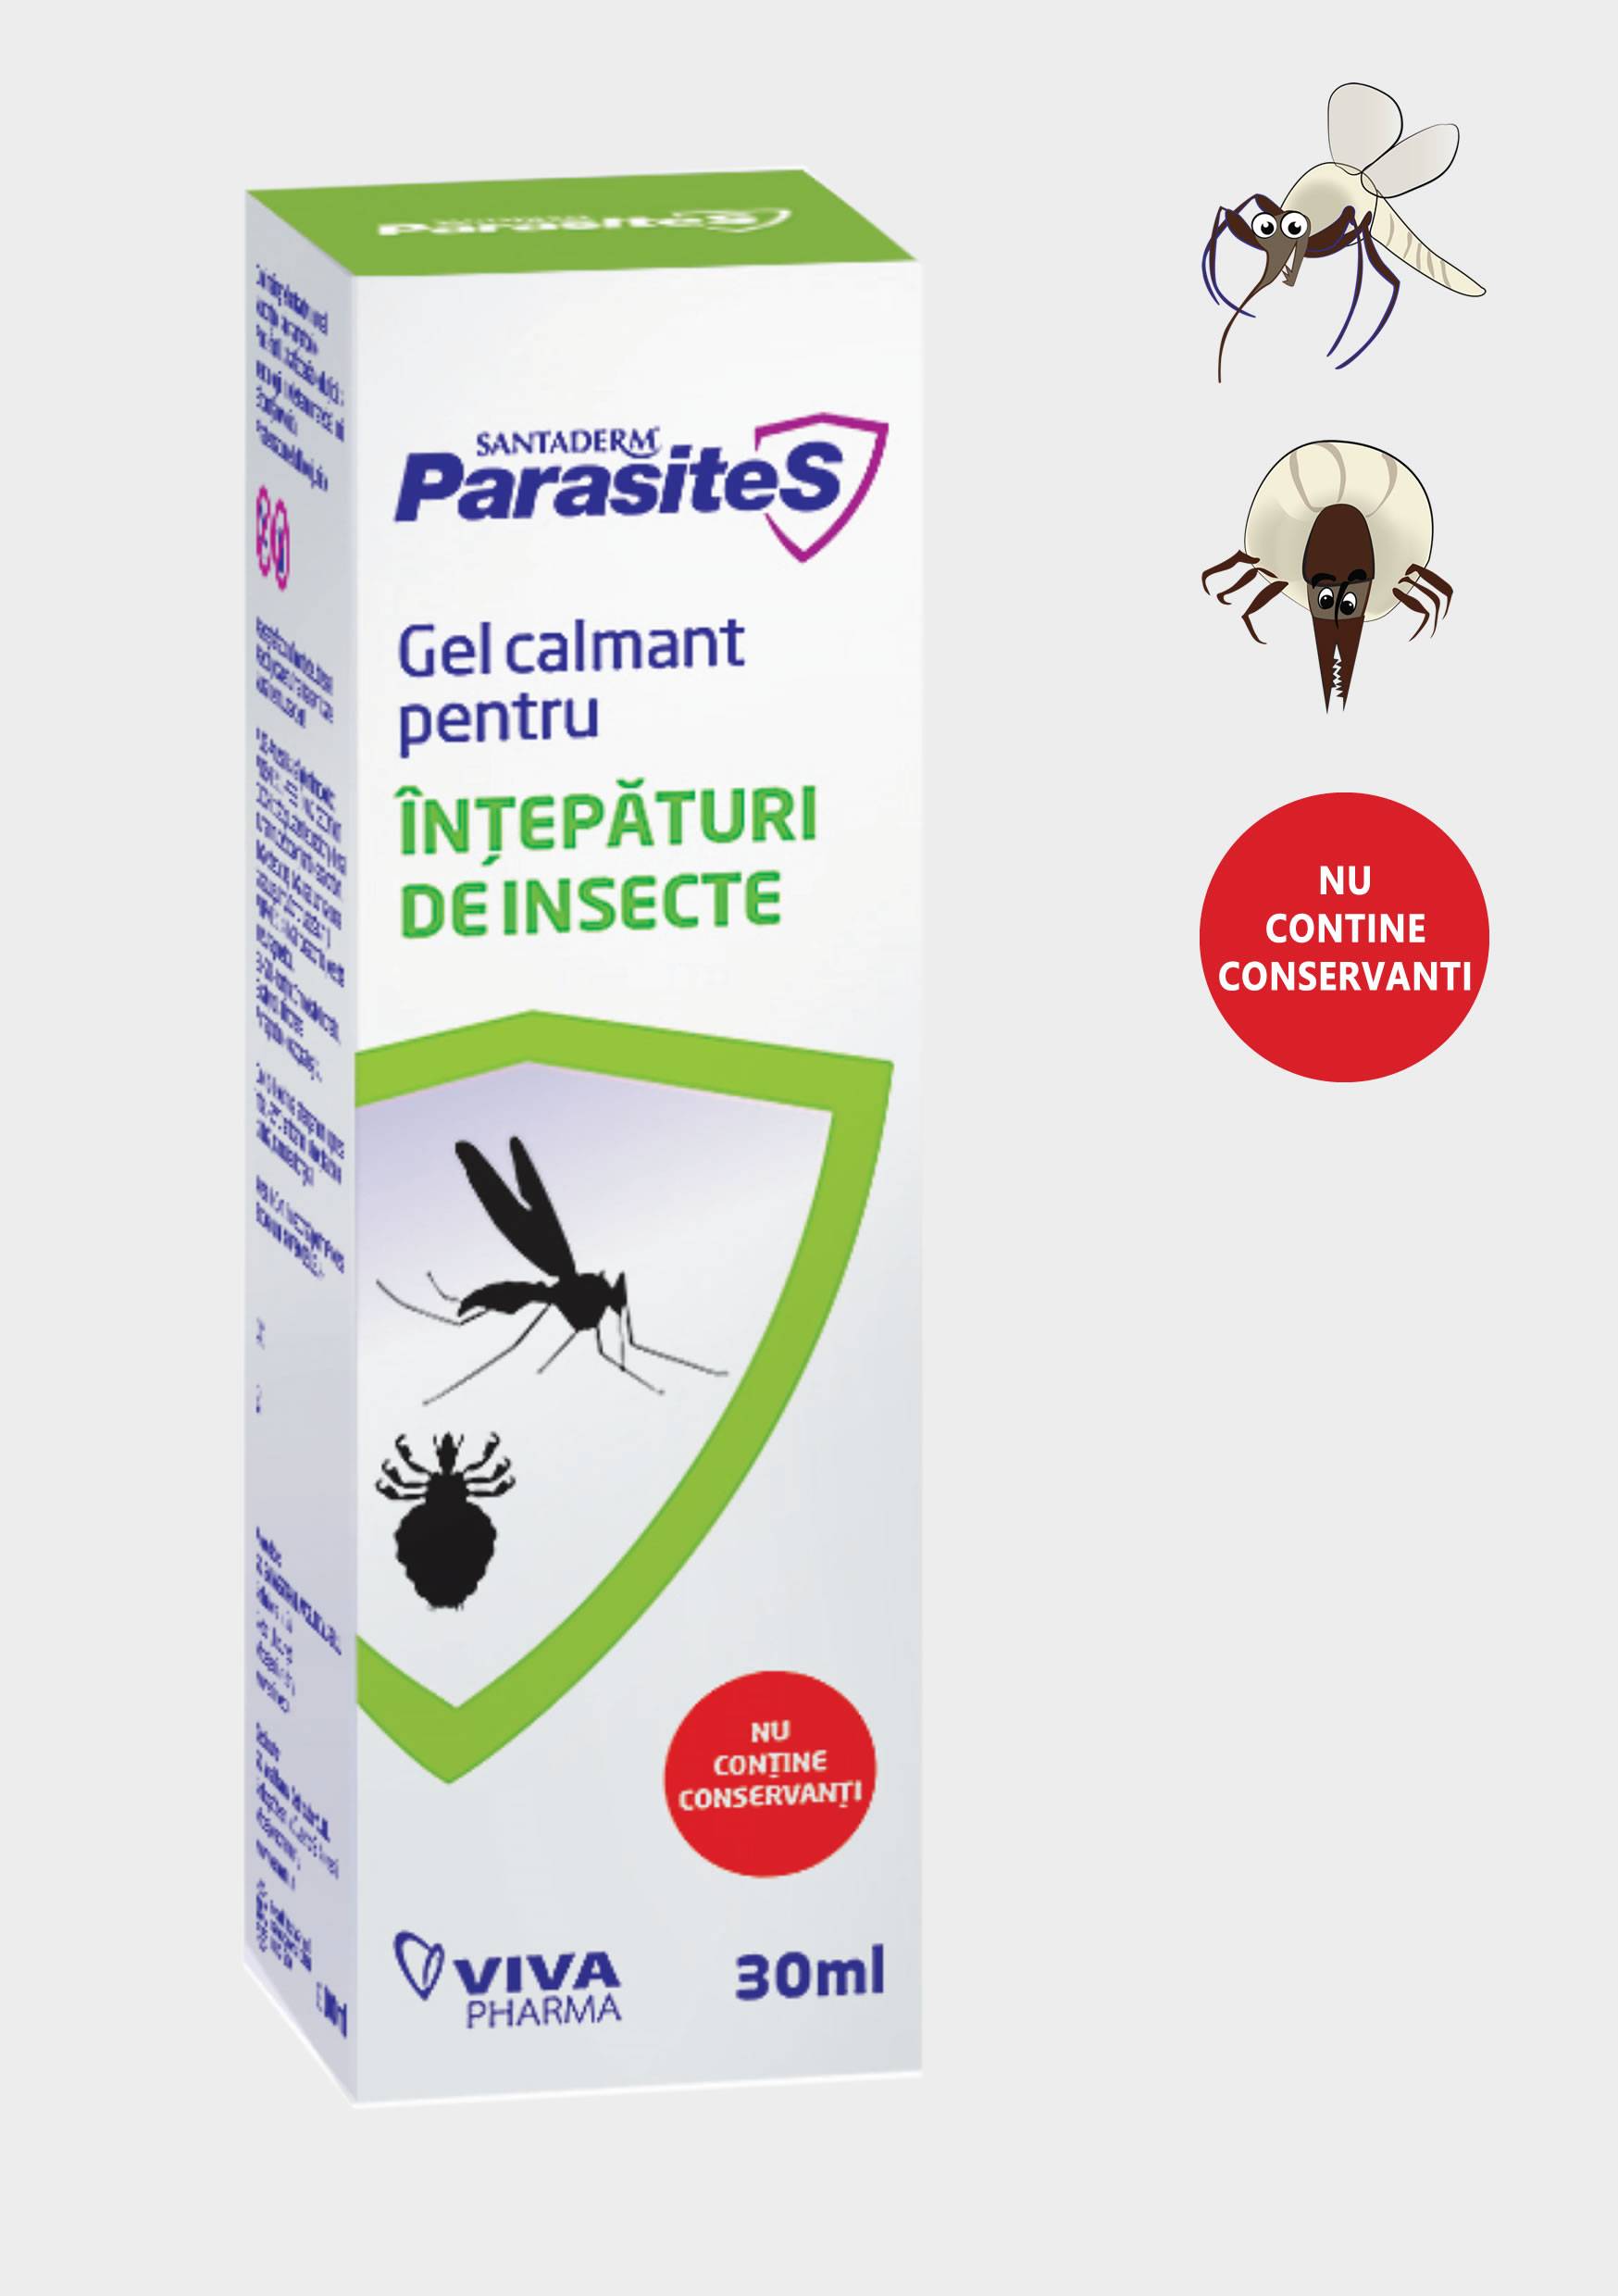 Gel calmant pentru intepaturi de insecte 30ml, vitalia pharma,santaderm